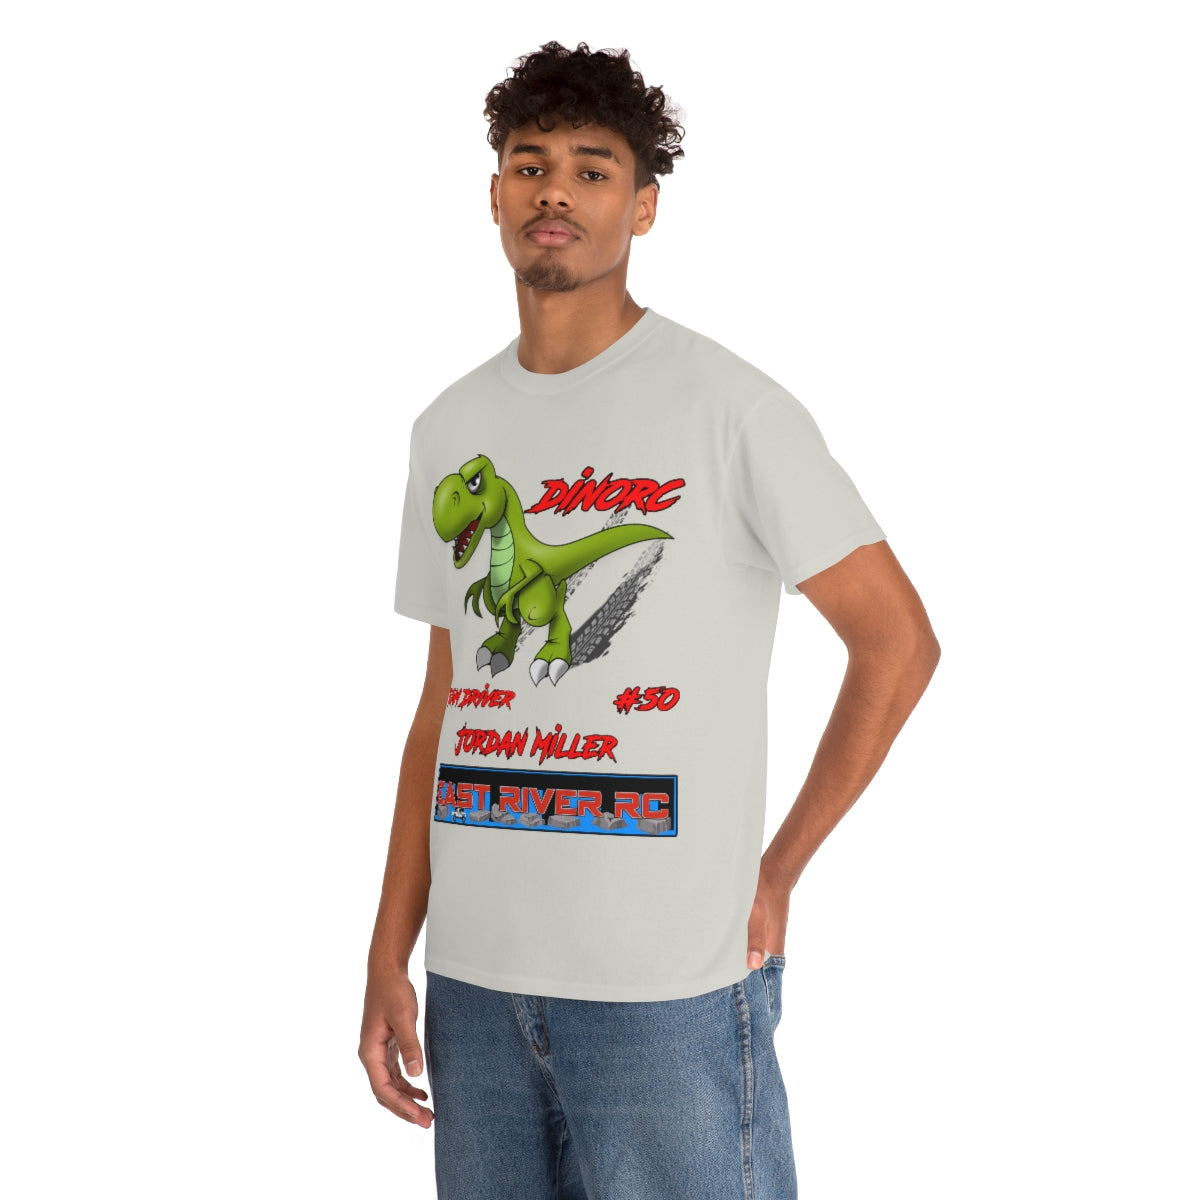 Team Driver Jordan Miller  DinoRc Logo T-Shirt S-5x